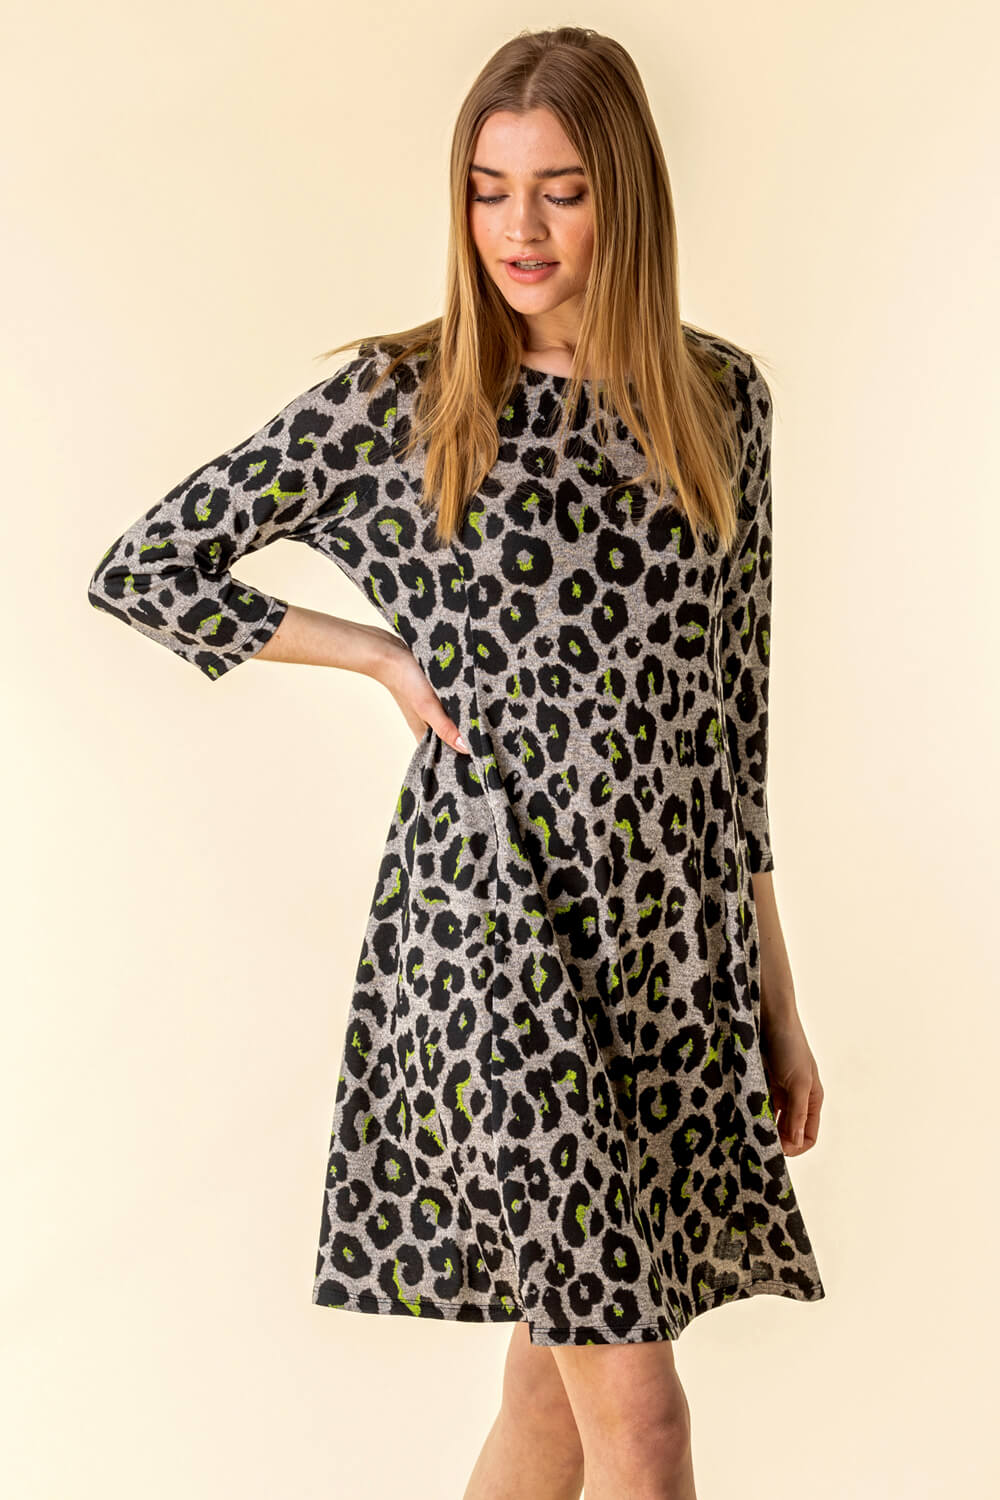 Brown Contrast Animal Print Dress, Image 2 of 4